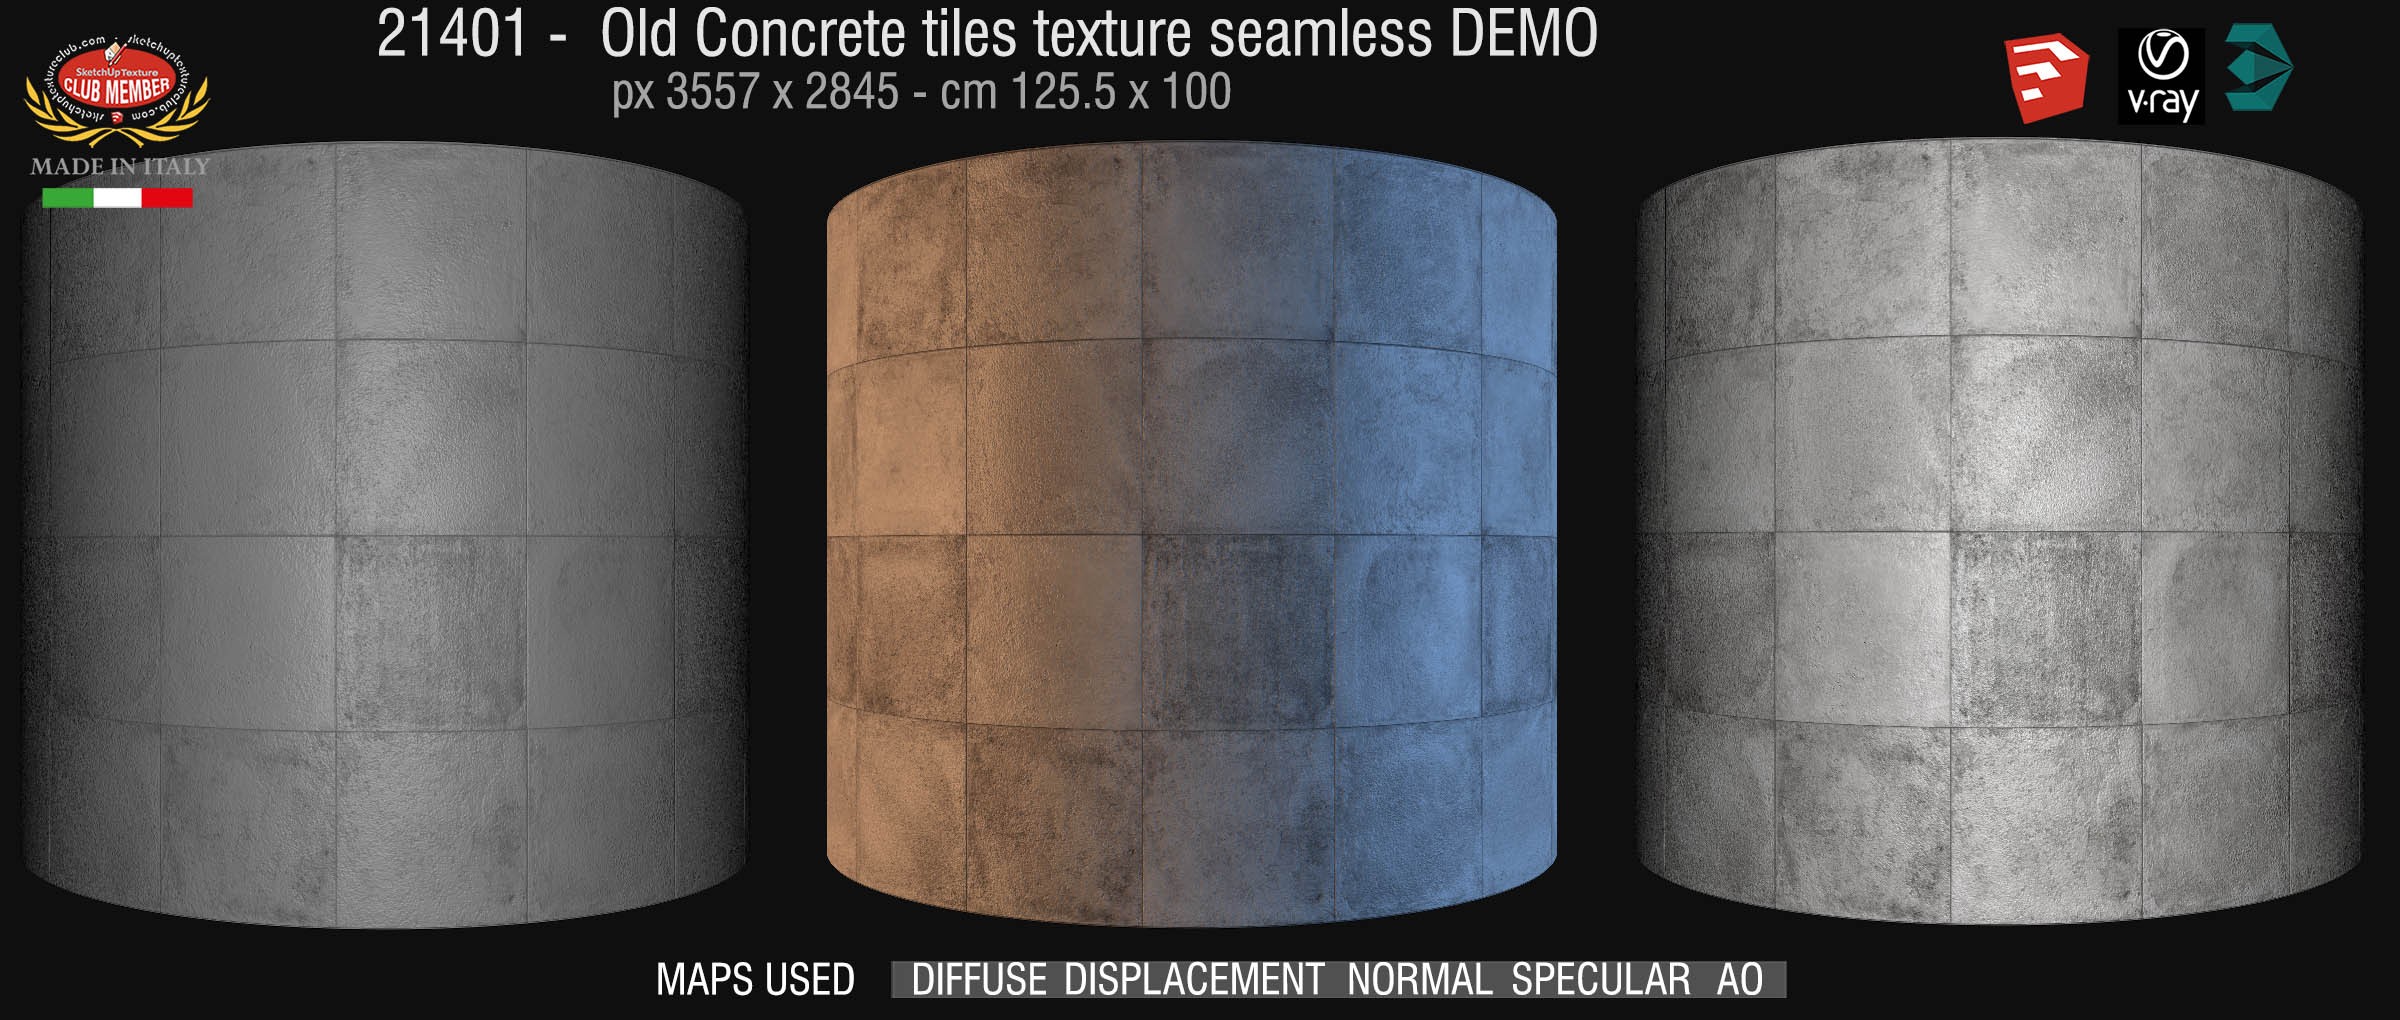 21401 old concrete tiles texture seamless + maps DEMO